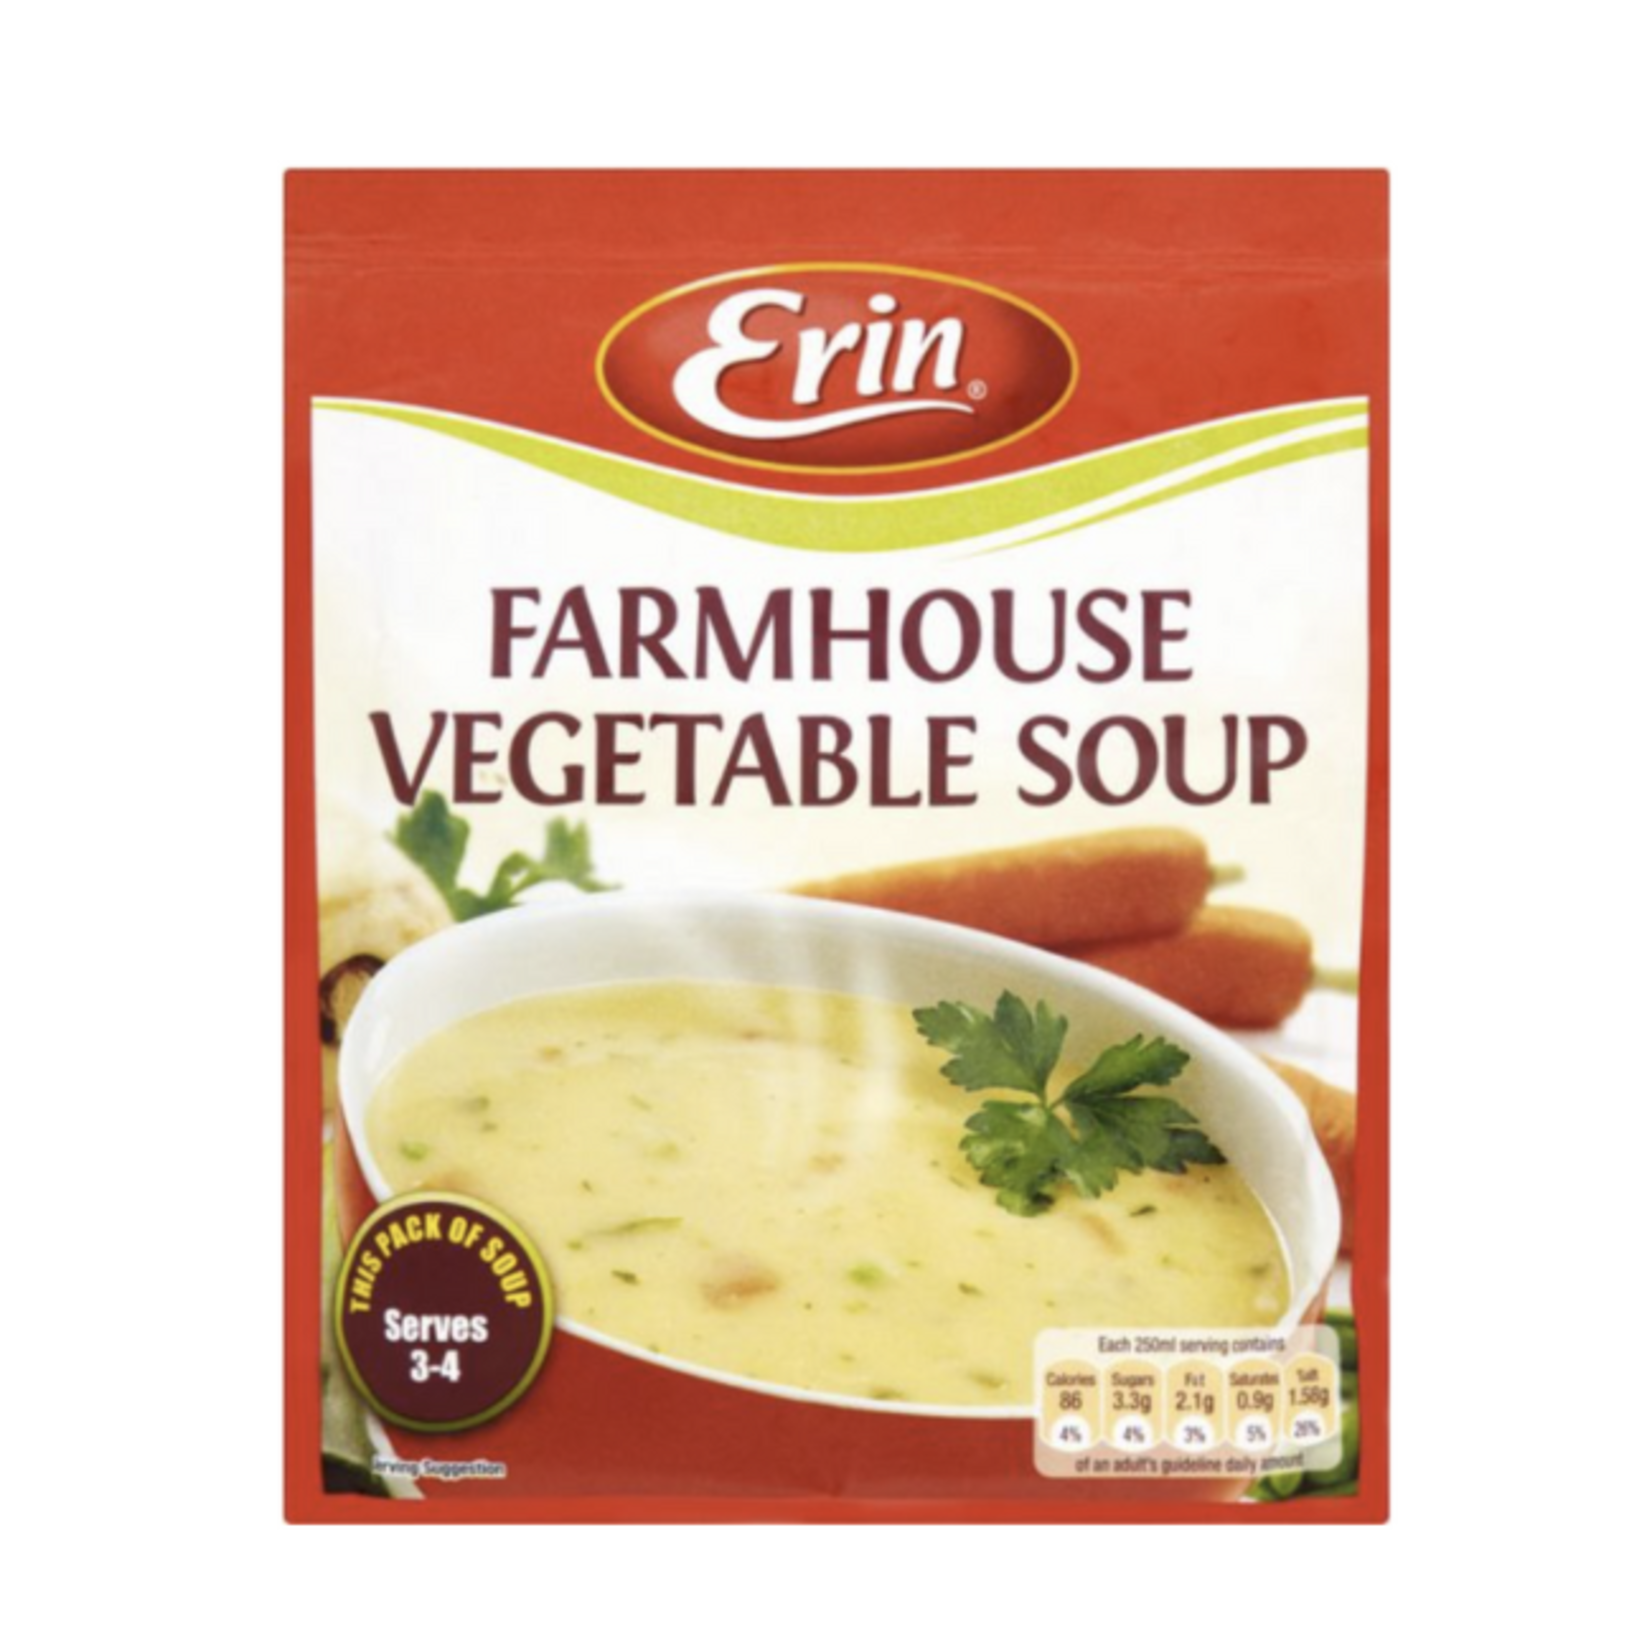 Erin Farmhouse Vegetable Soup 75g Packet